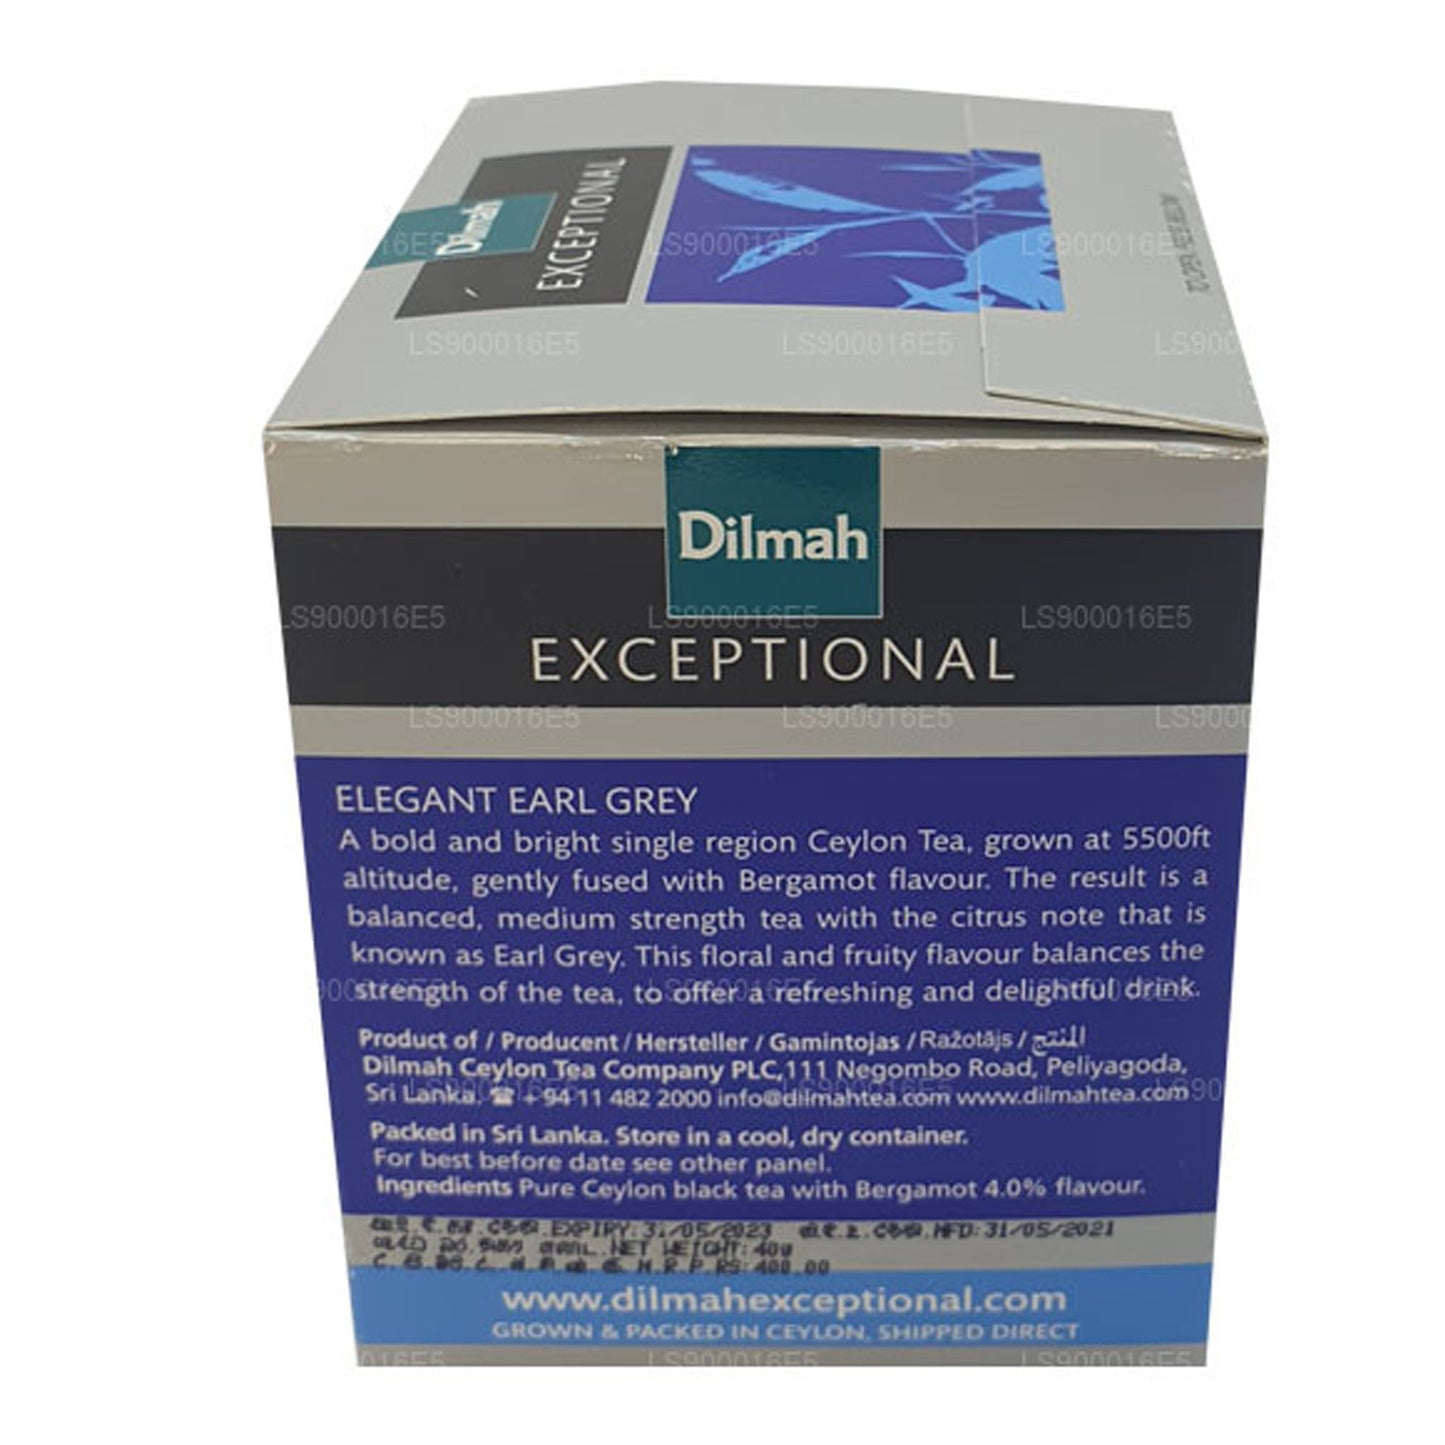 Dilmah Exceptional Elegant Earl Grey Real Leaf Tea (40g)